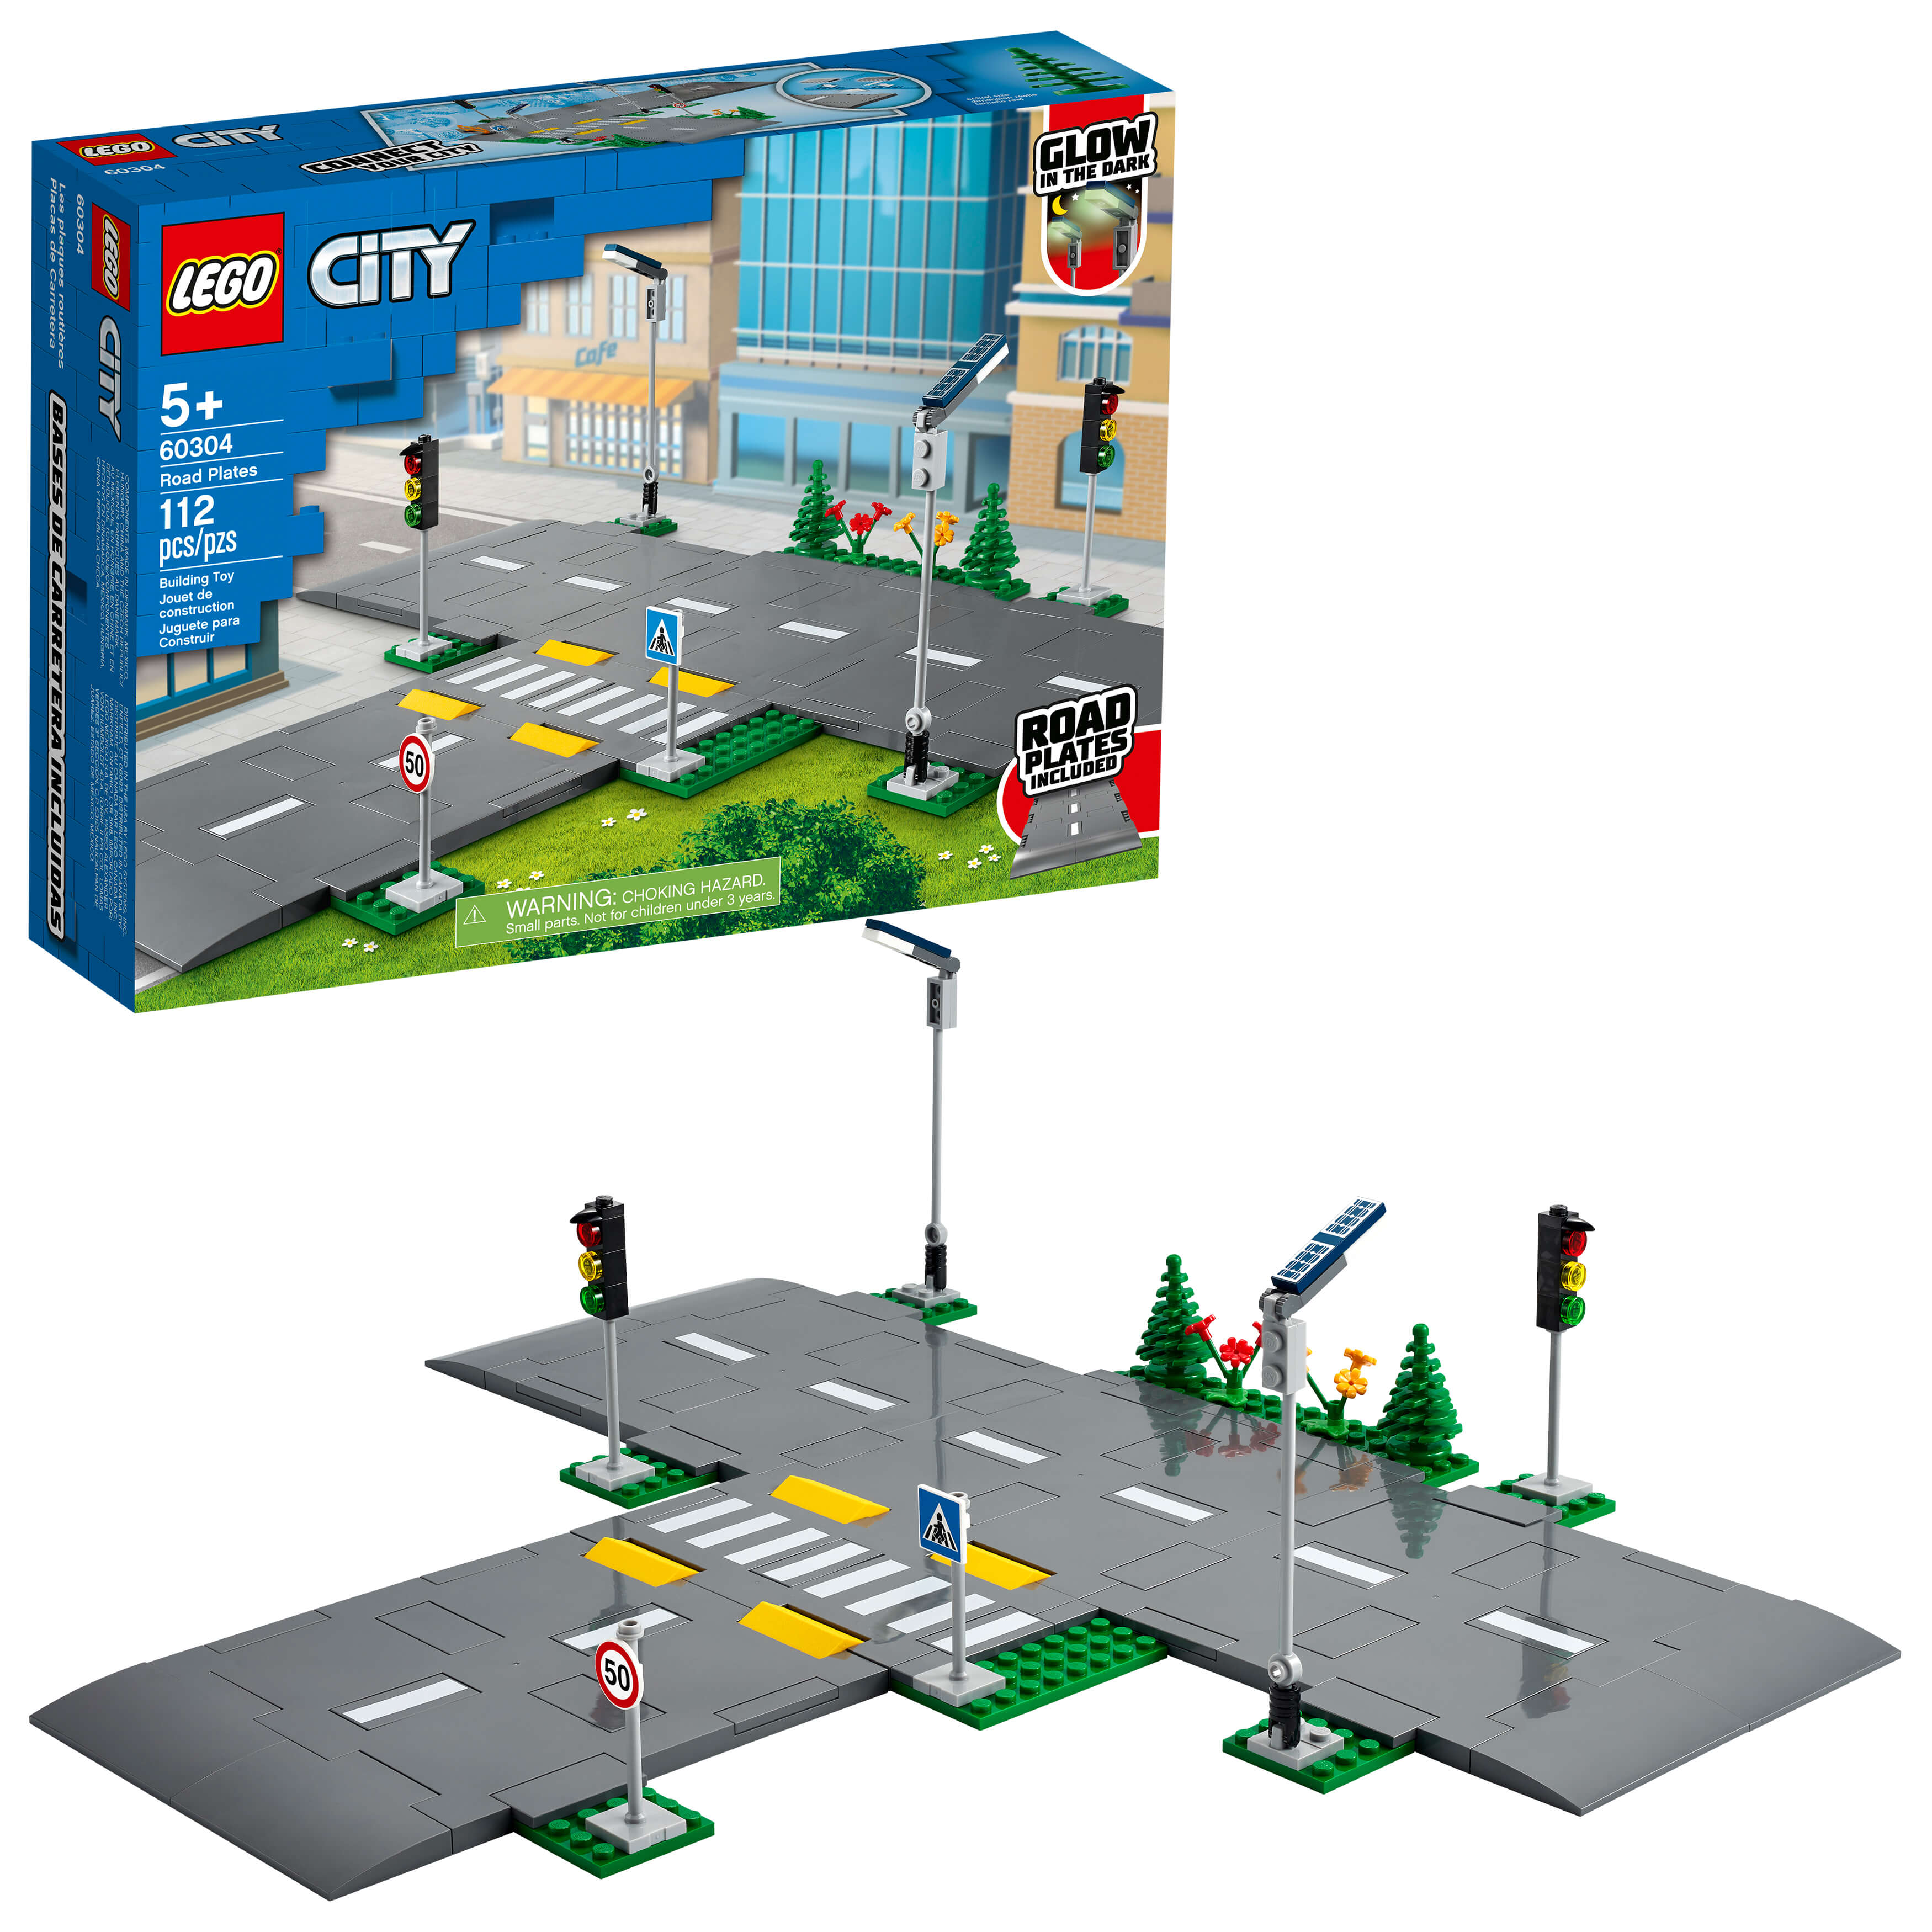 LEGO® City Road Plates 60304 Building Kit (112 Pieces)